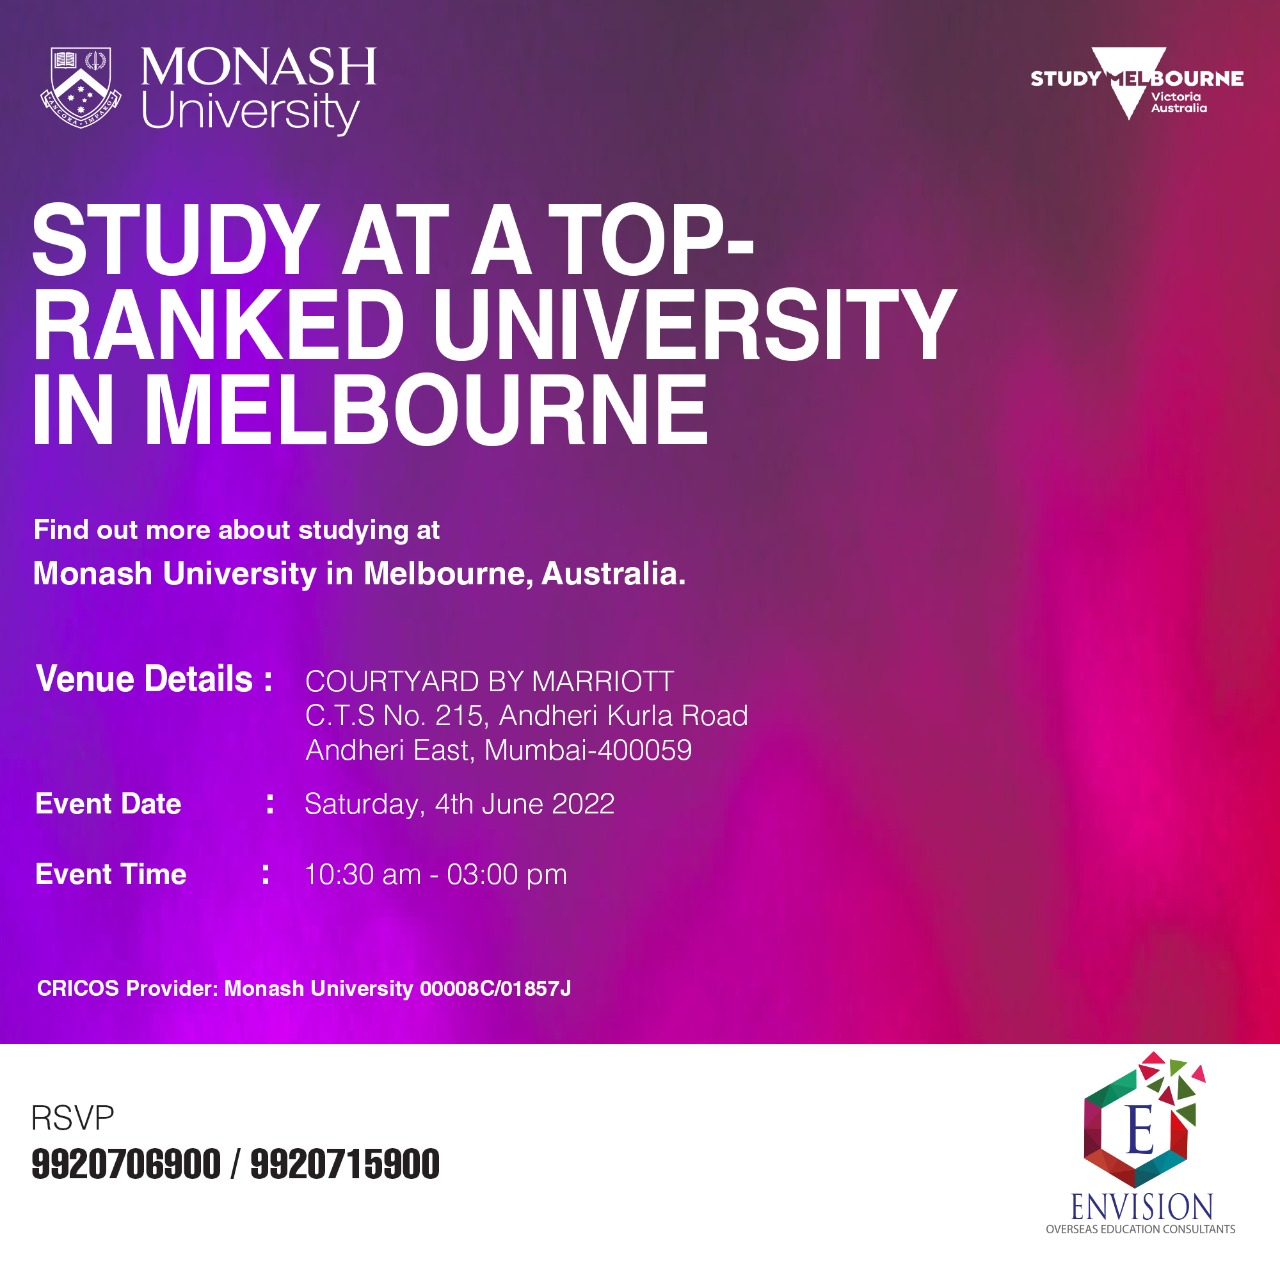 Study in Melbourne